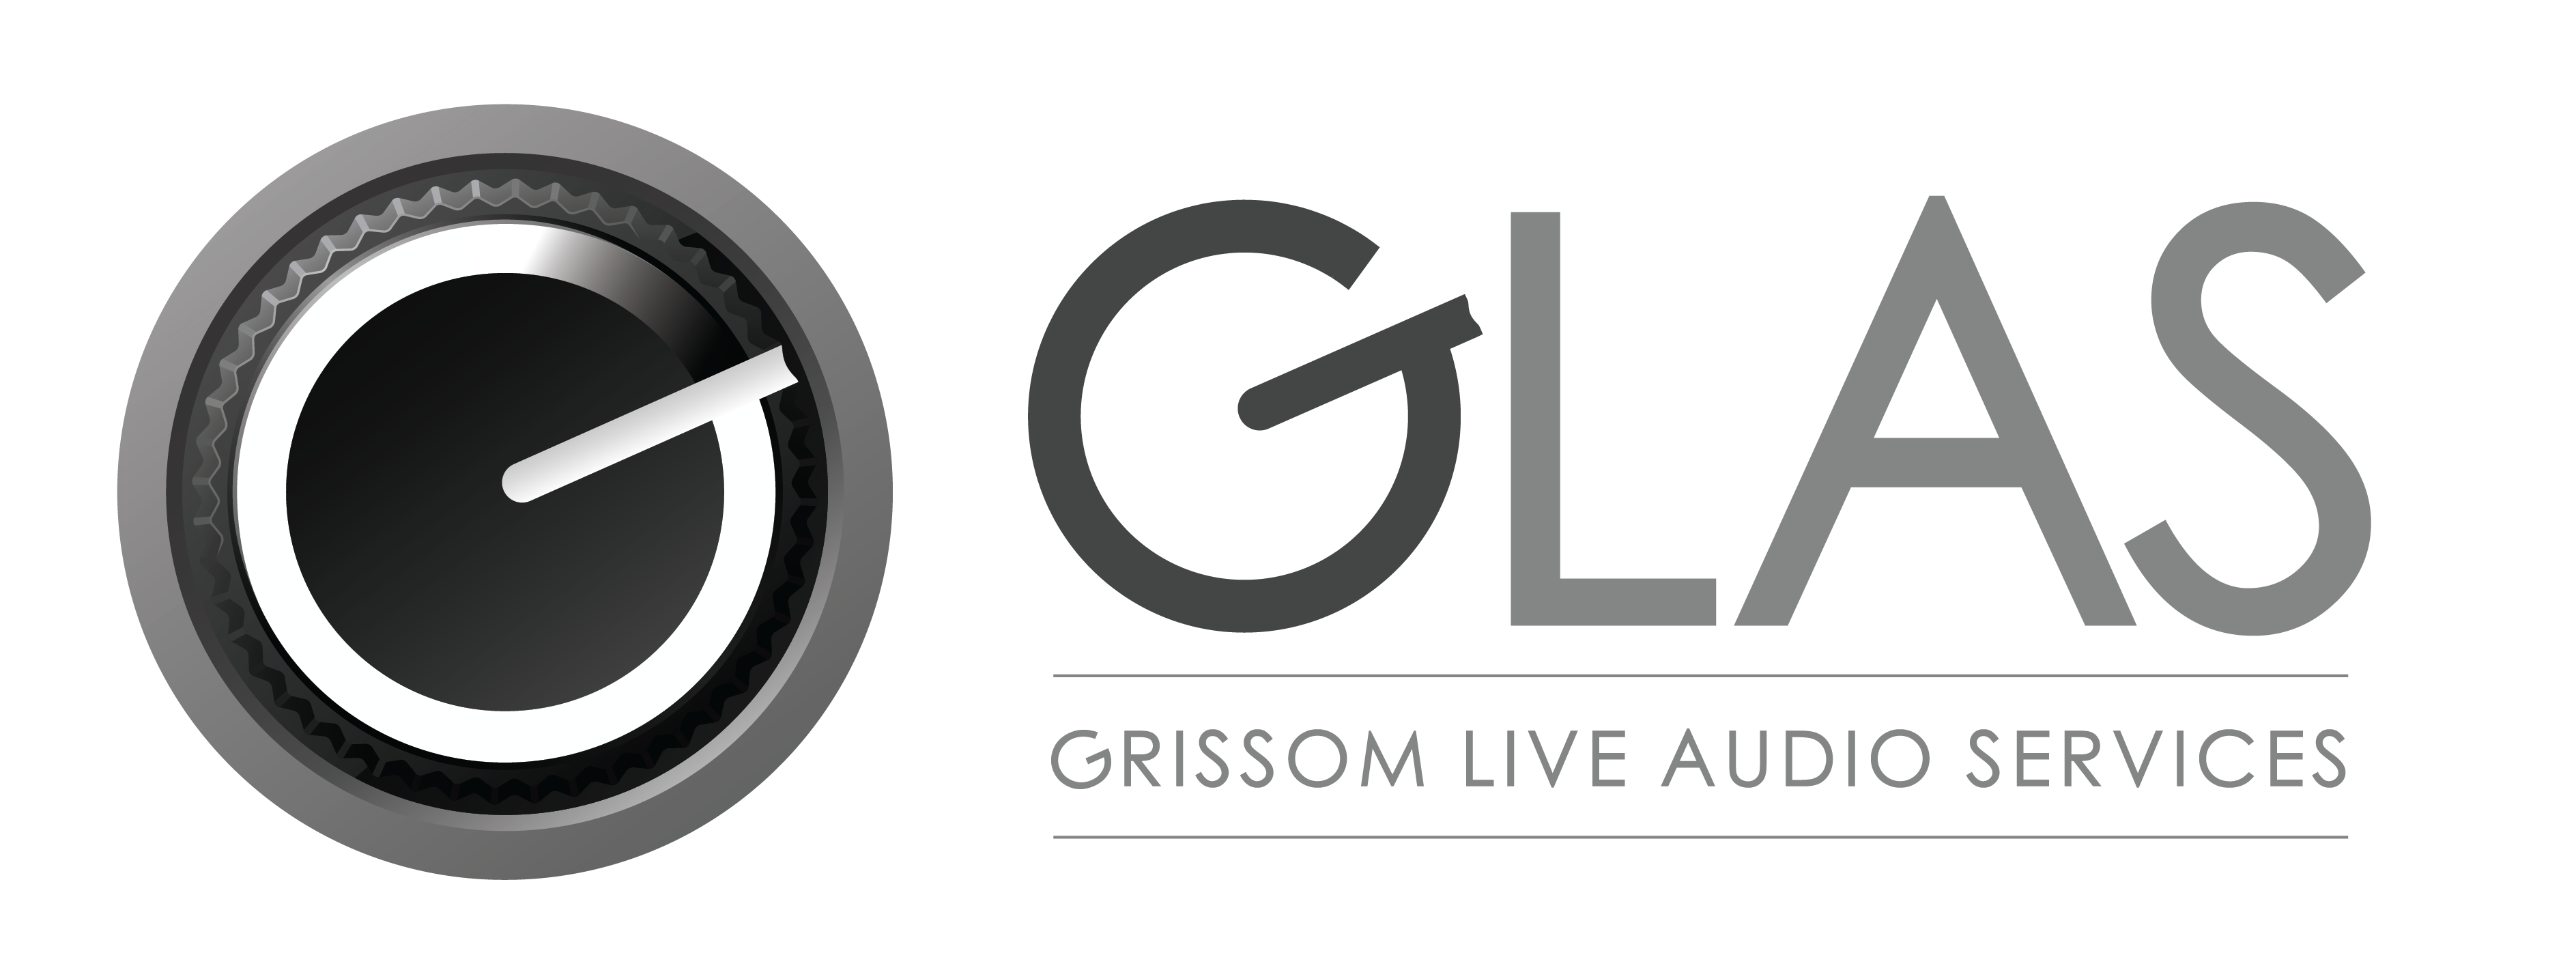 Grissom Live Audio Services GLAS